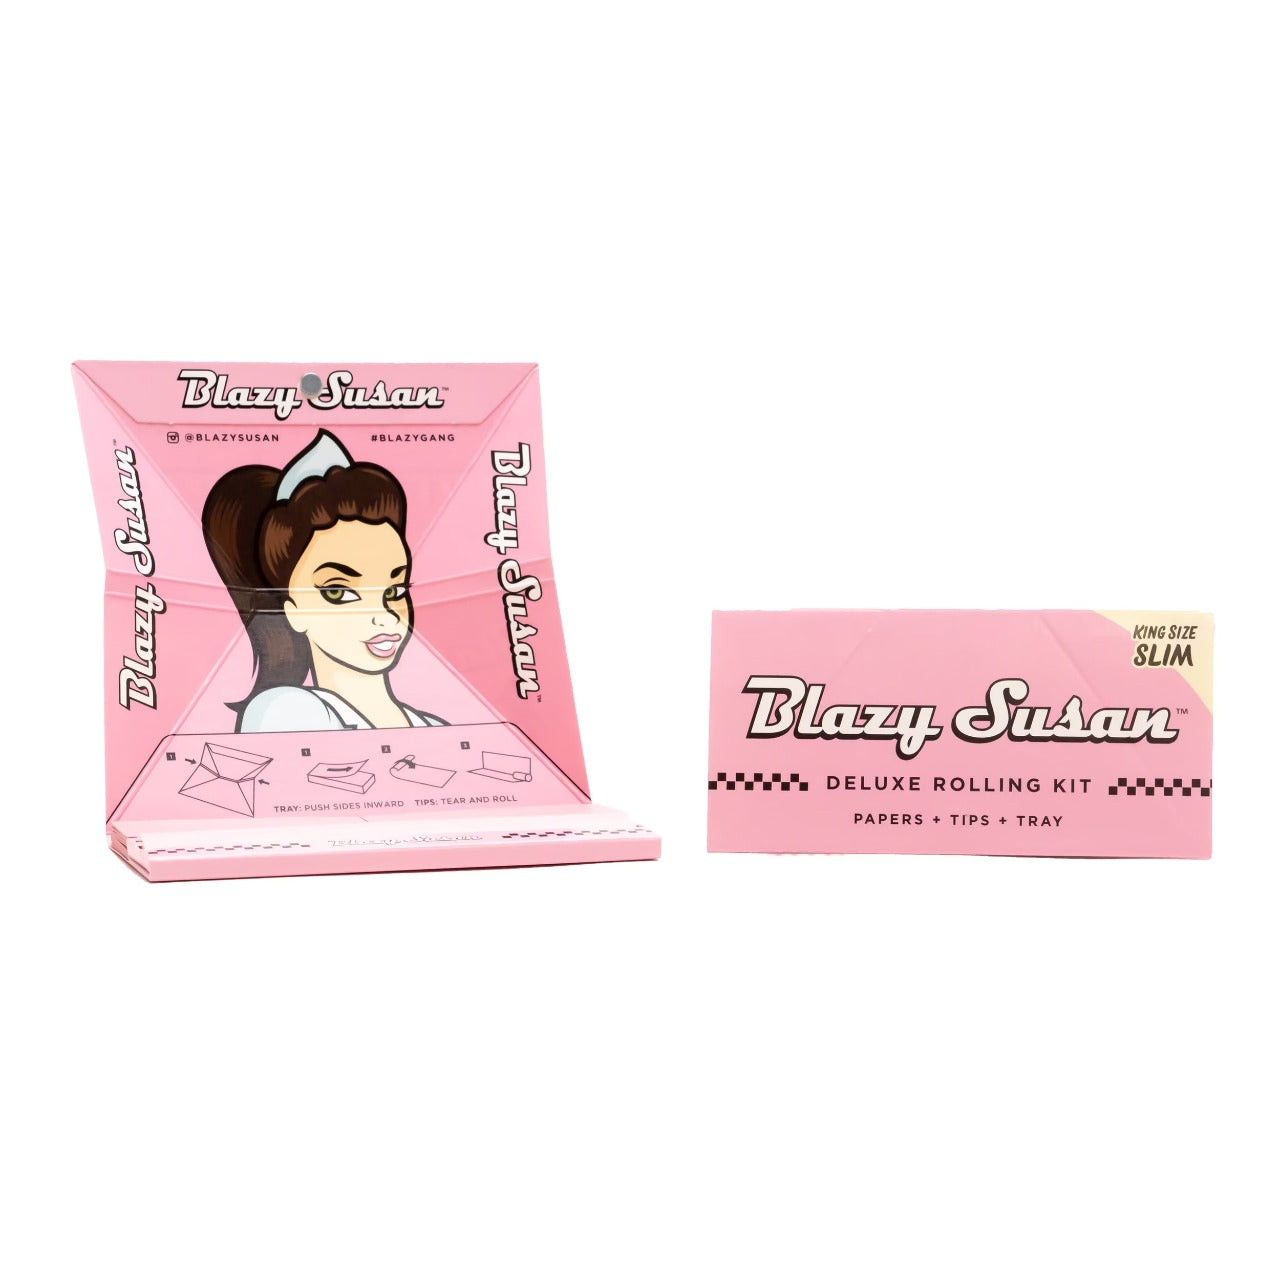 Paquete de Papel Rosa King Size con Filtros Blazy Susan